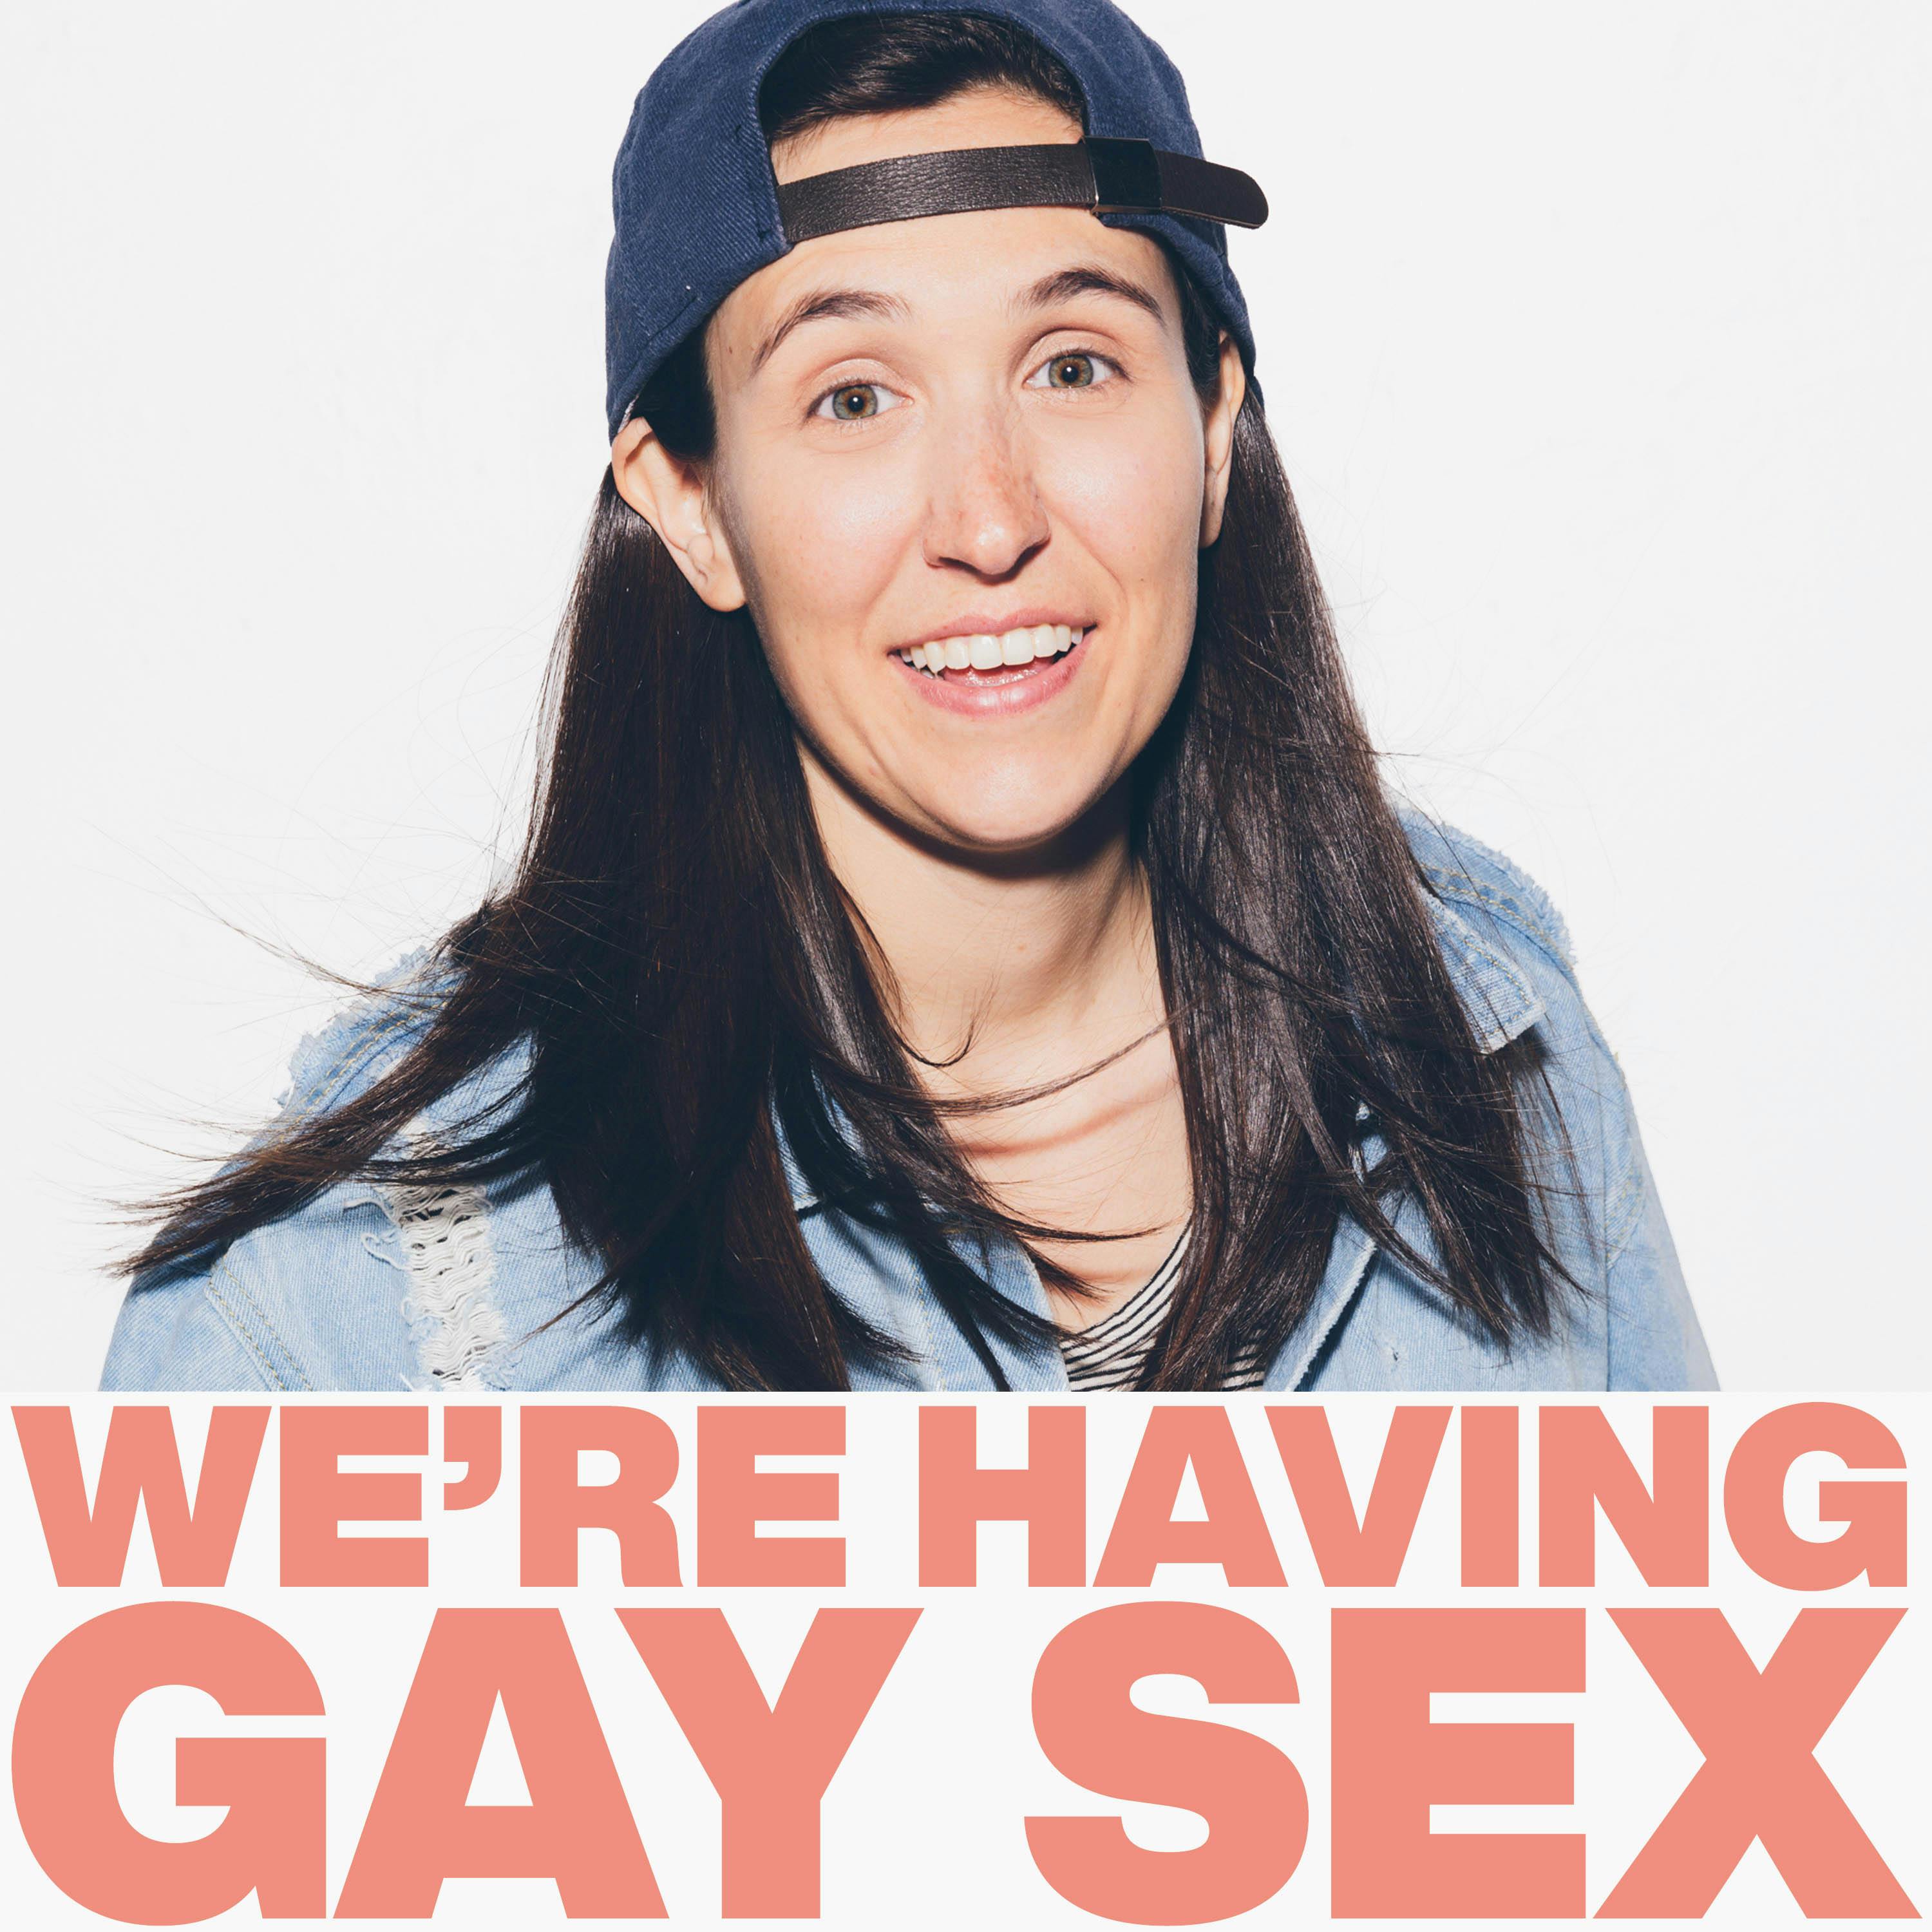 We're Having Gay Sex - Eman El-Husseini is a Traditional Muslim Lesbian